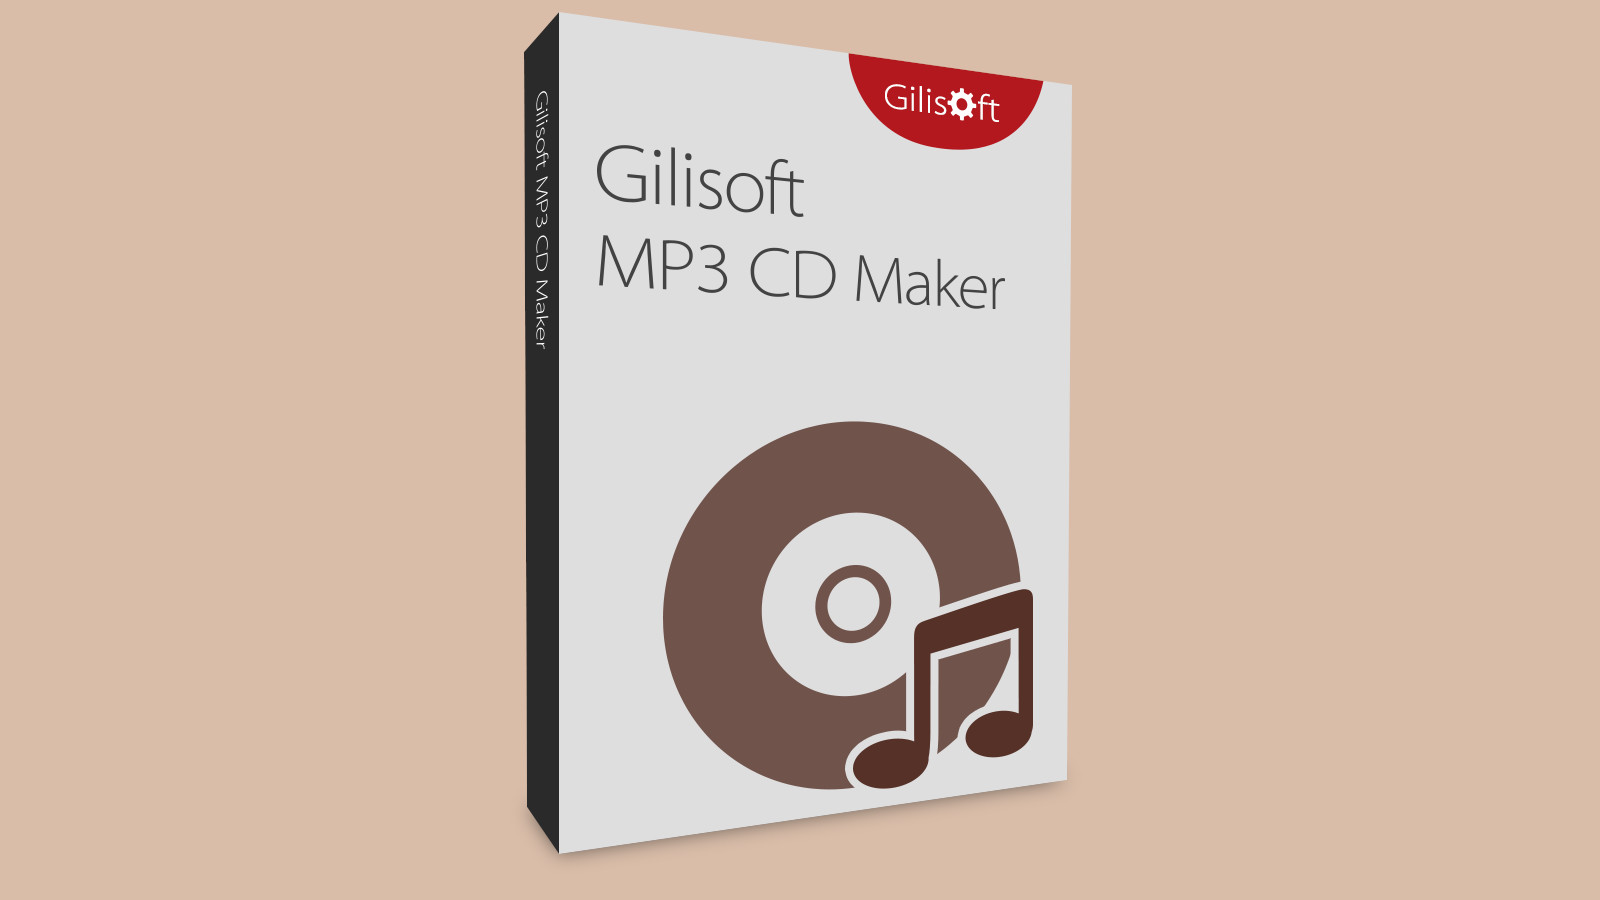 Gilisoft MP3 CD Maker CD Key, $5.65